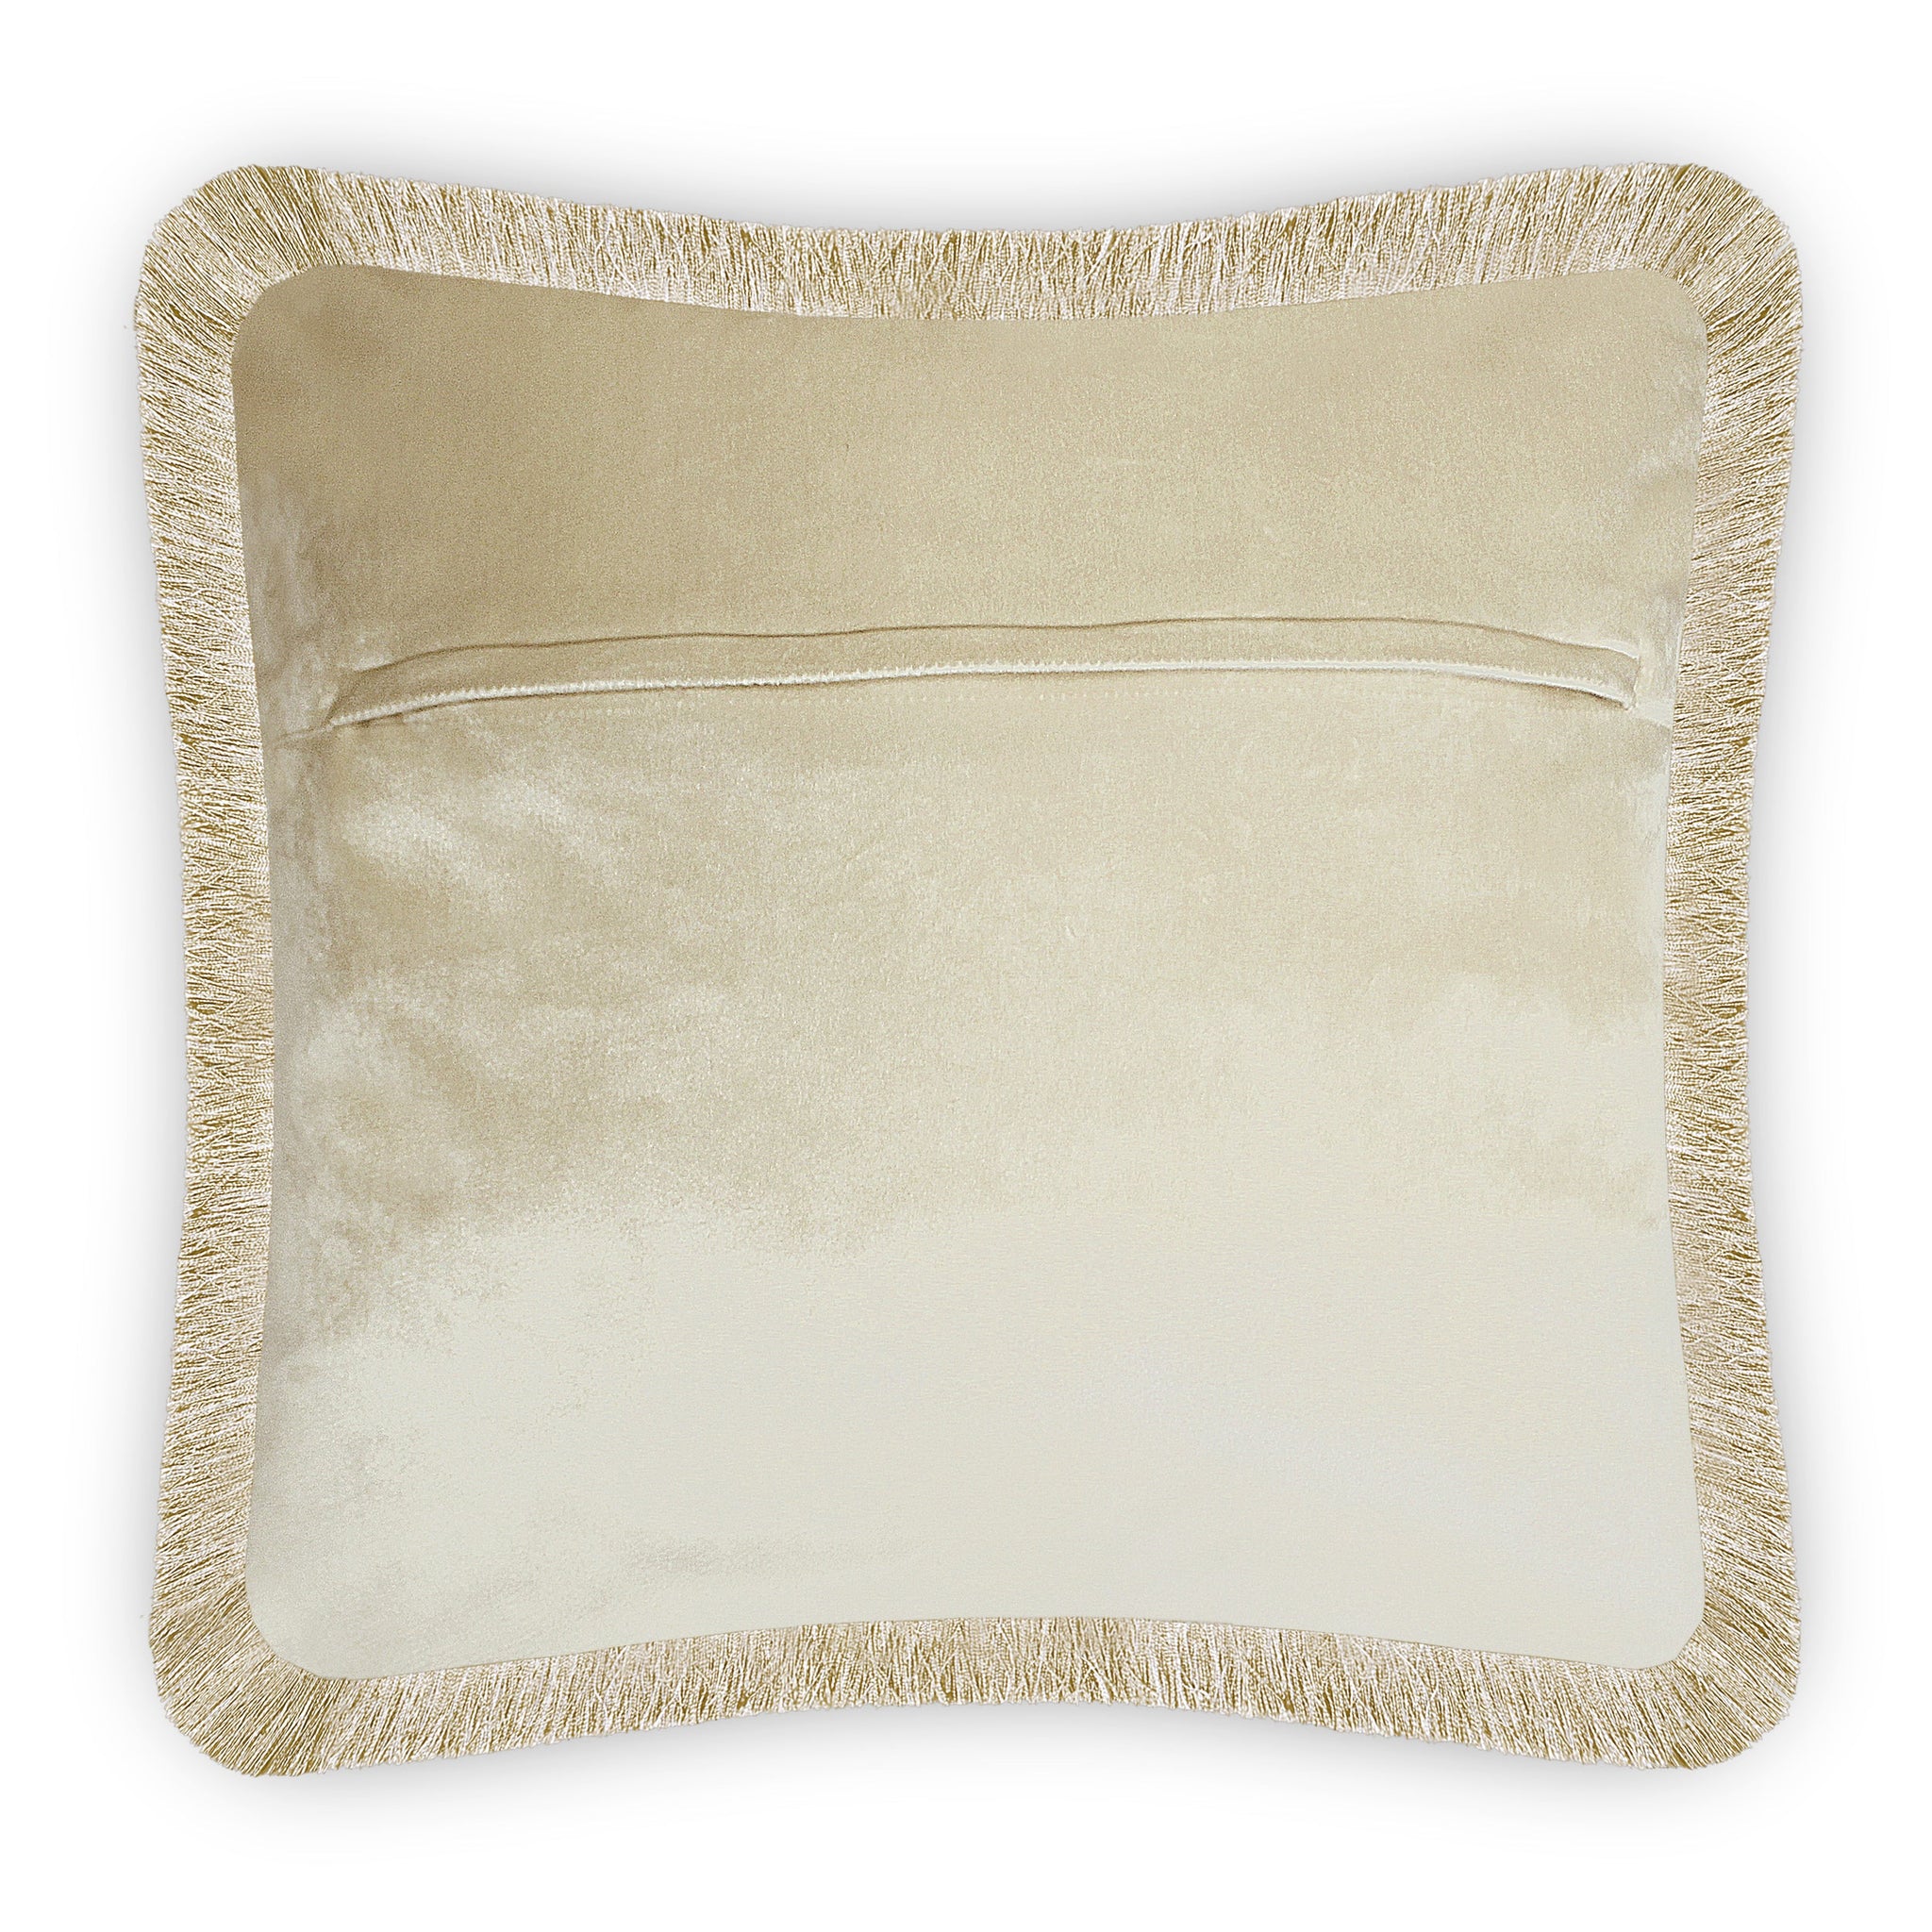 Velvet Cushion Cover Arabesque Floral Decorative Pillowcase Classic Home Decor Throw Pillow for Sofa Chair Living Room 45x45 cm 18x18 In